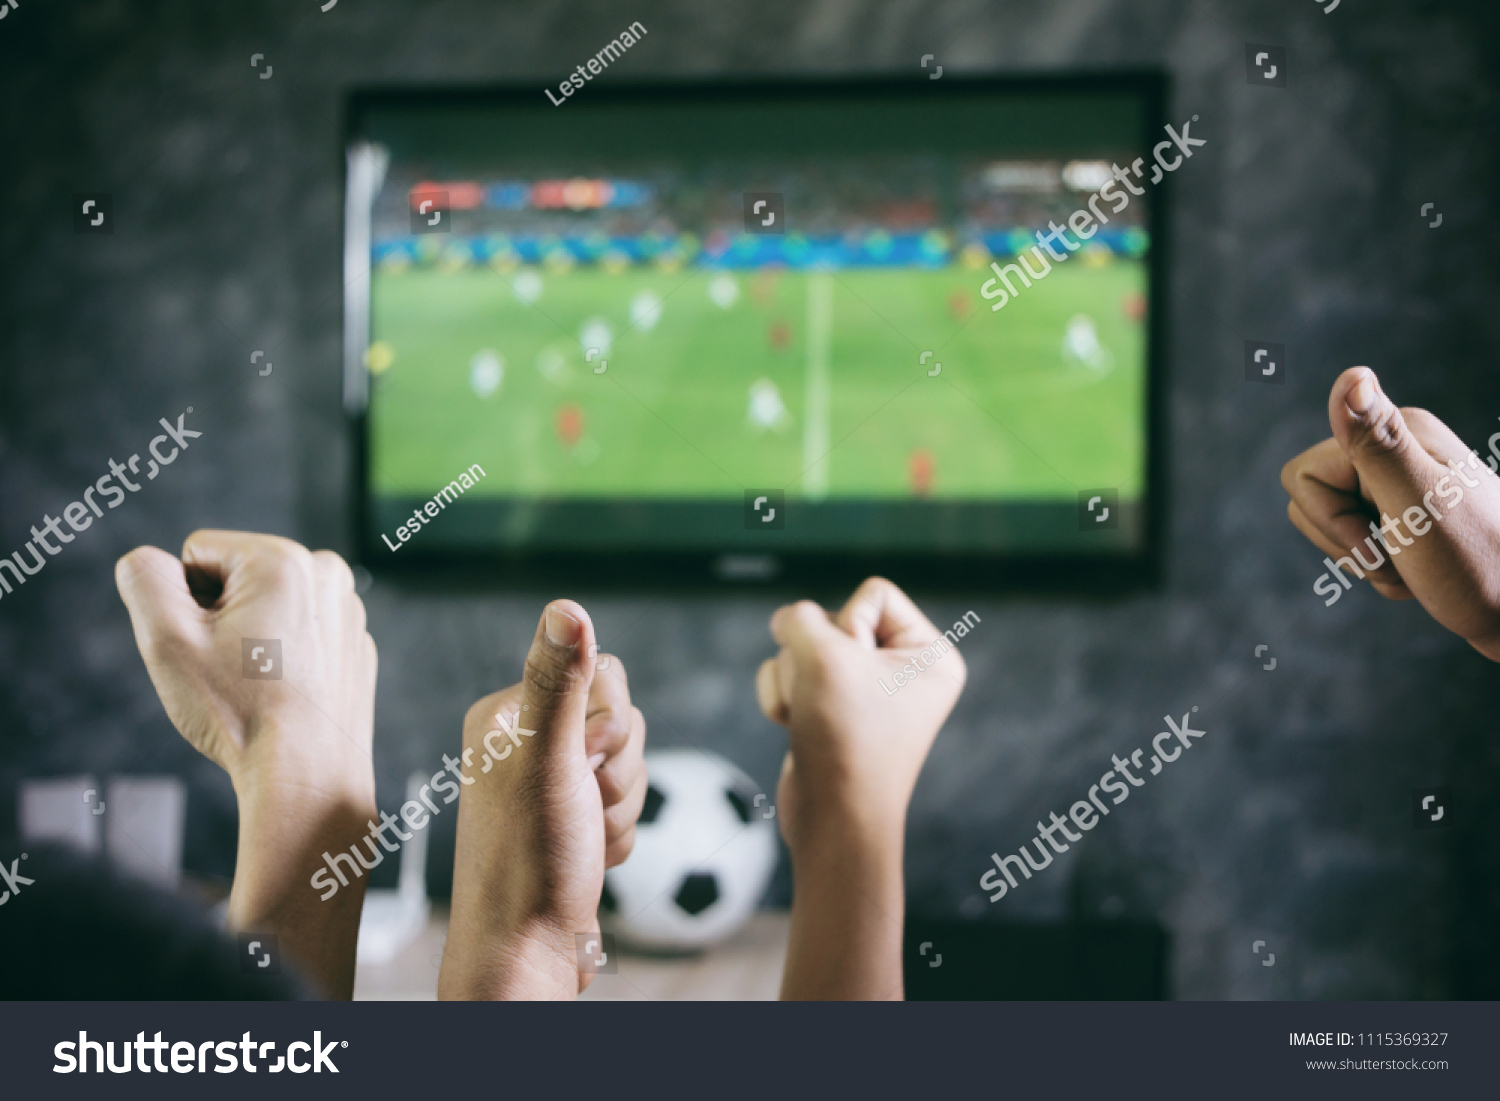 Do you sport on tv. Футбол по телевизору. Телевизор футбол. Футбол по телевизору семья. Телевизор с футболом картинка.